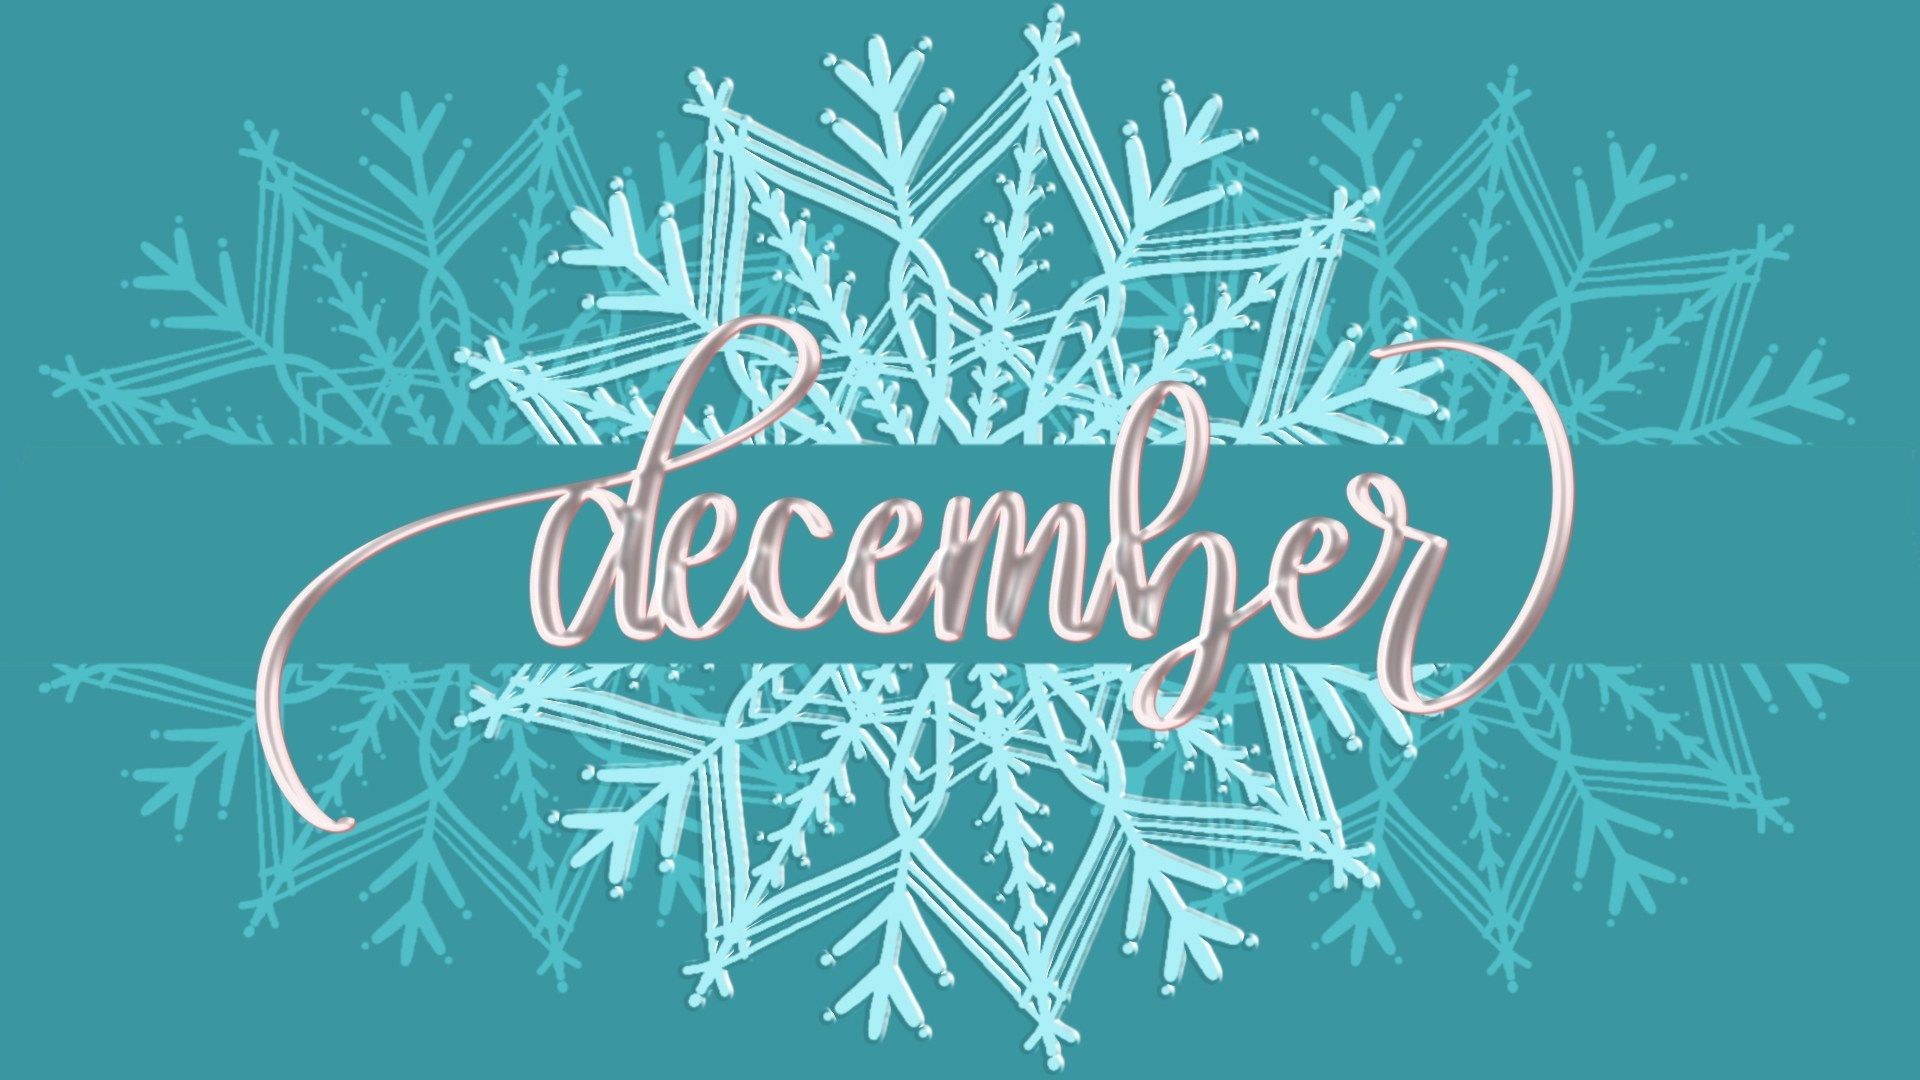 🔥 Free download December Desktop Wallpapers Top Free December Desktop